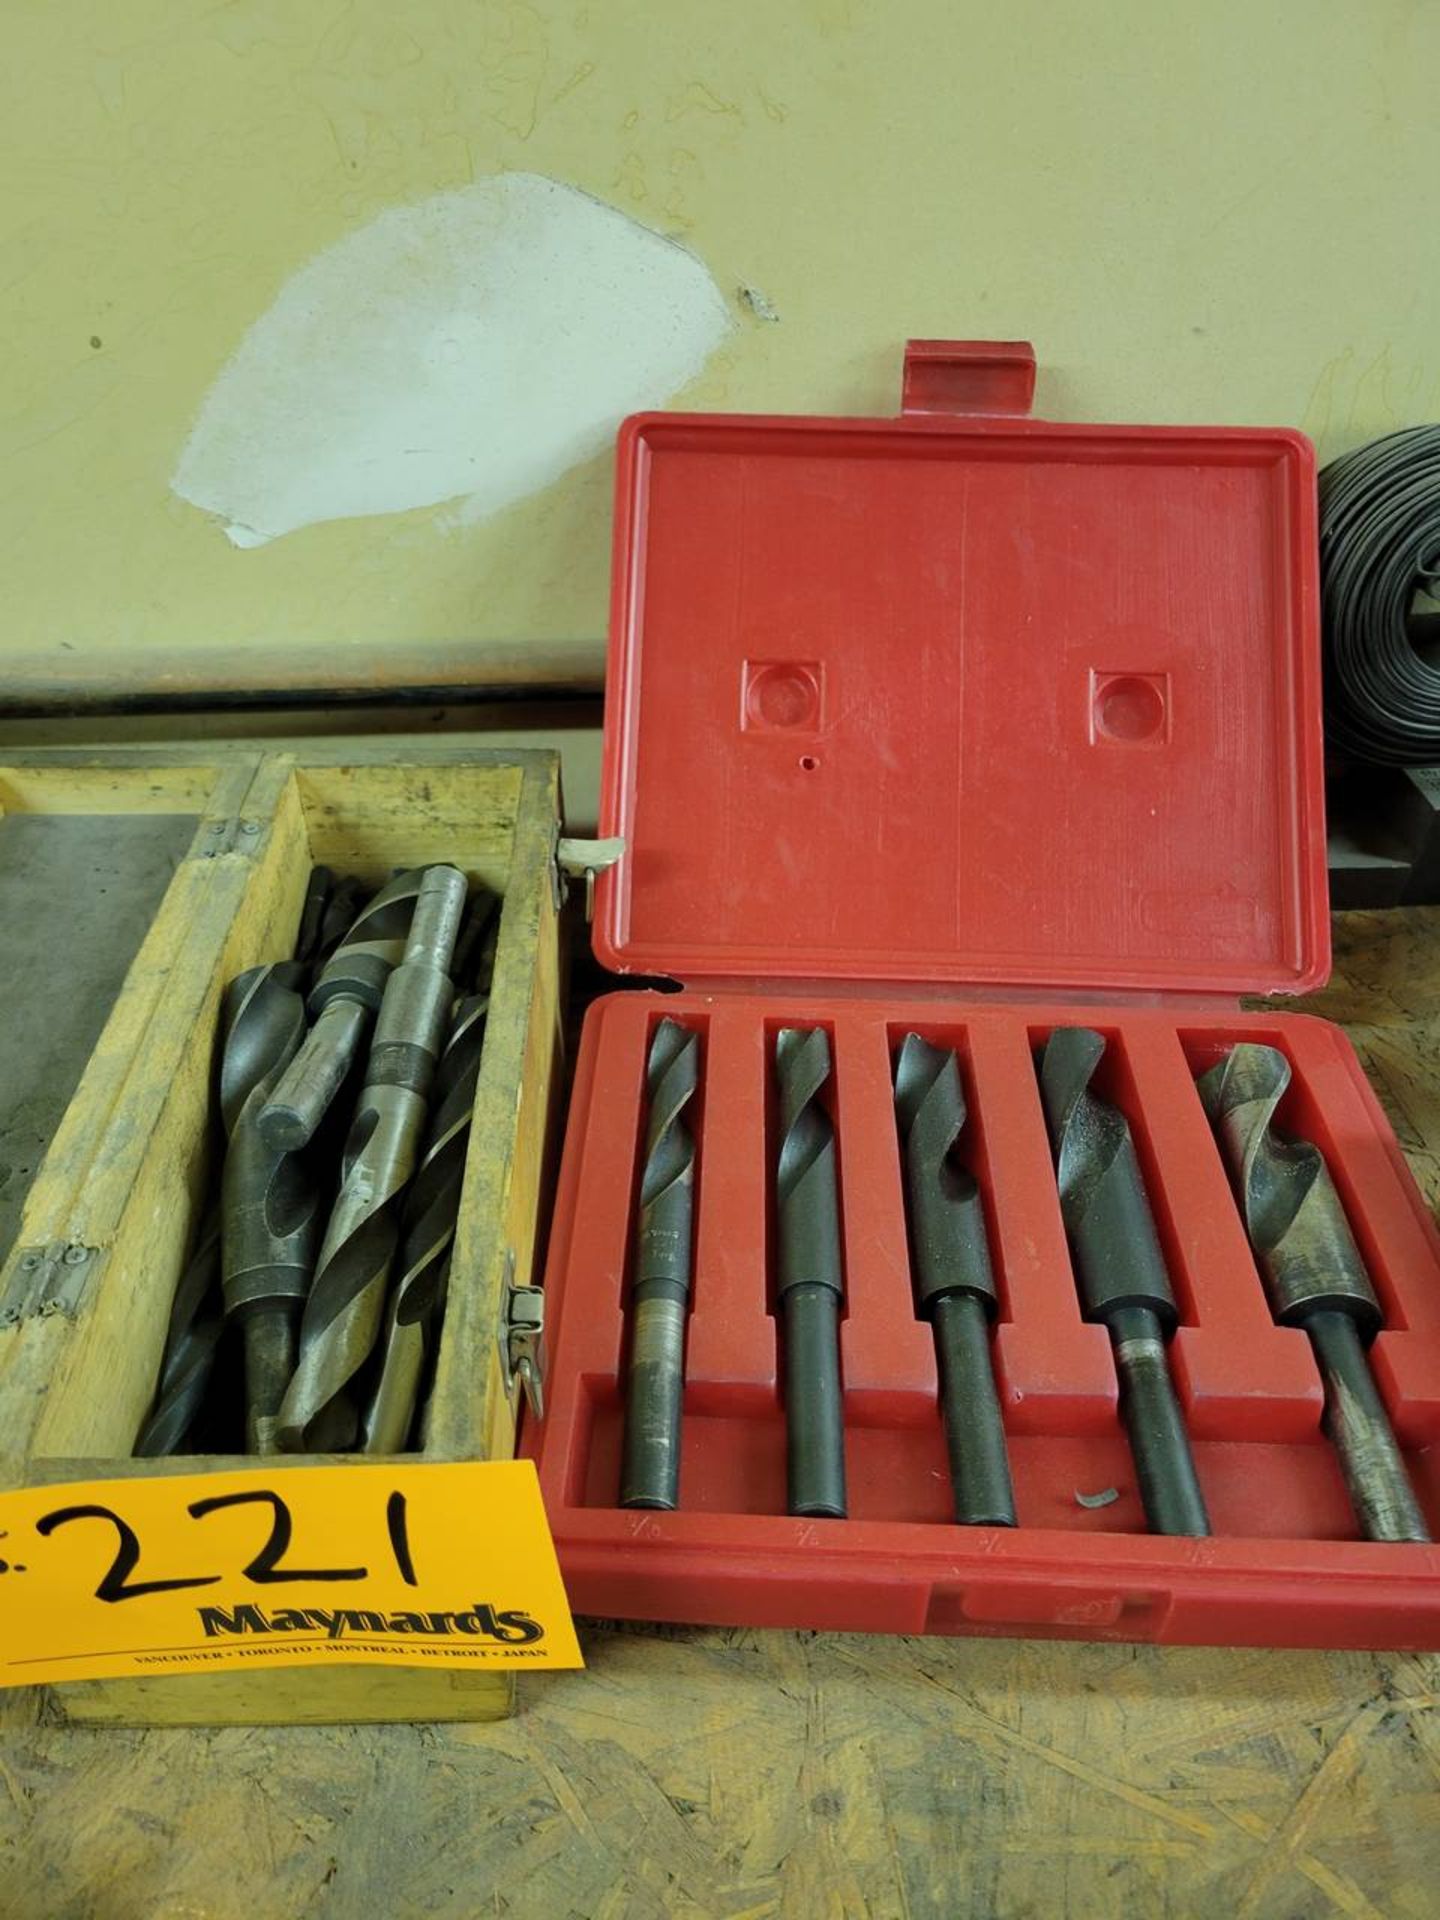 (2) sets of drill bits